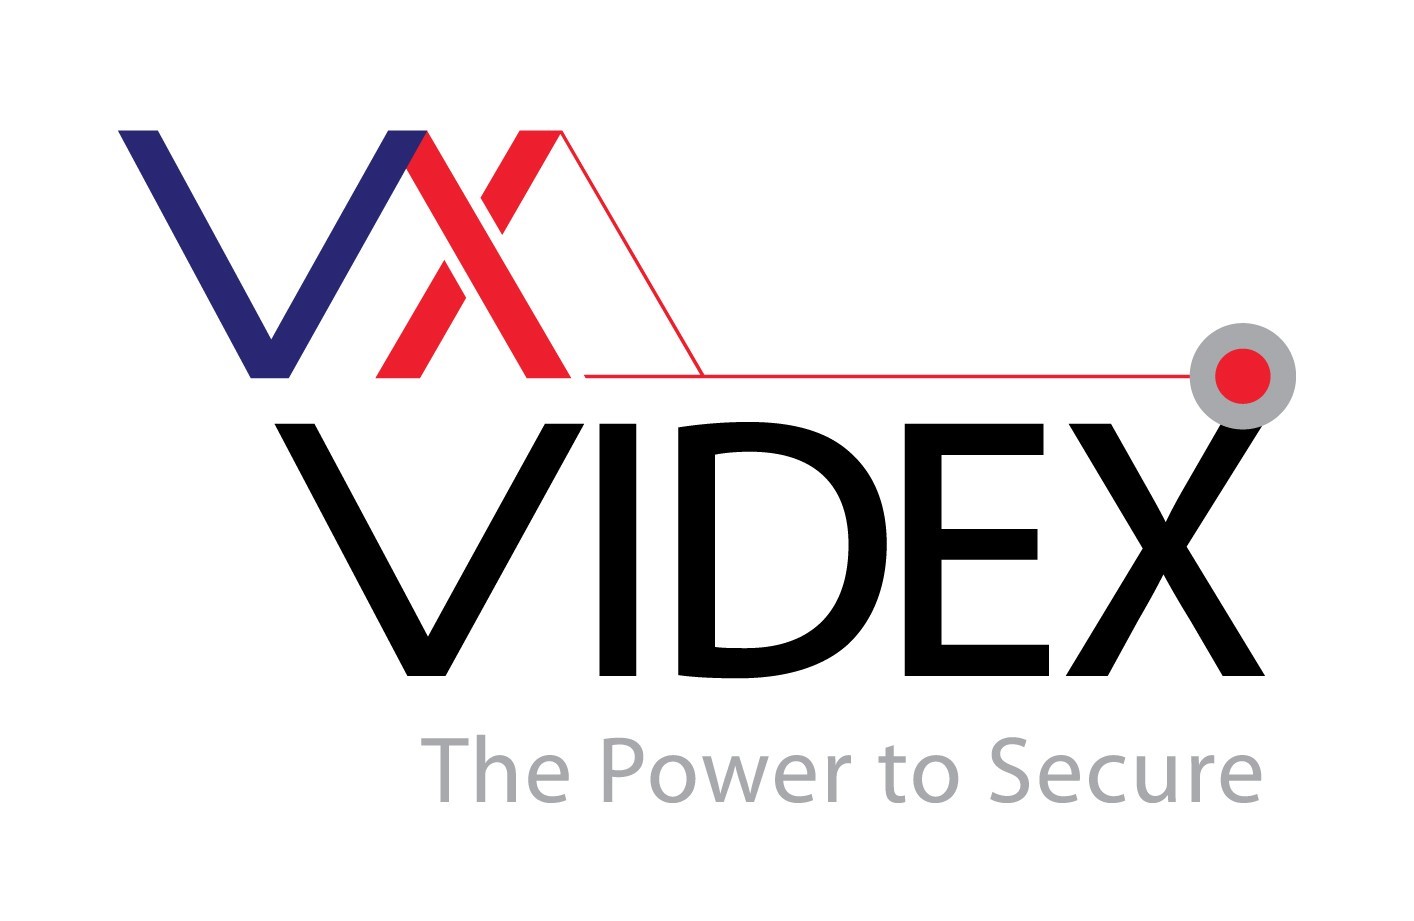 VXVidex